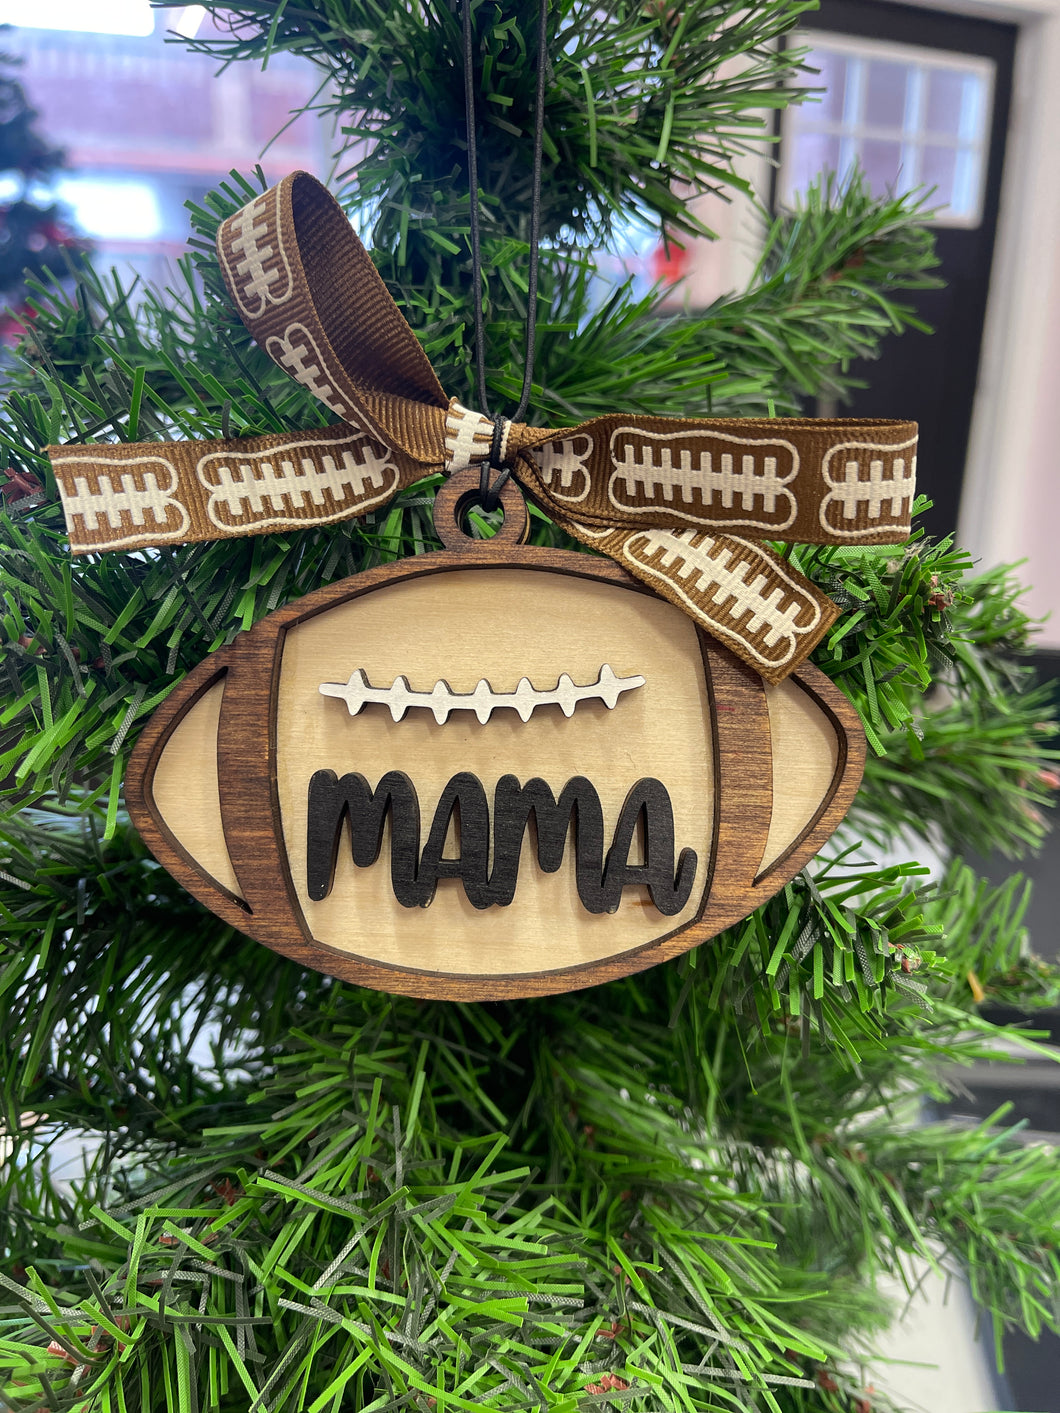 Football mama ornament/car charm